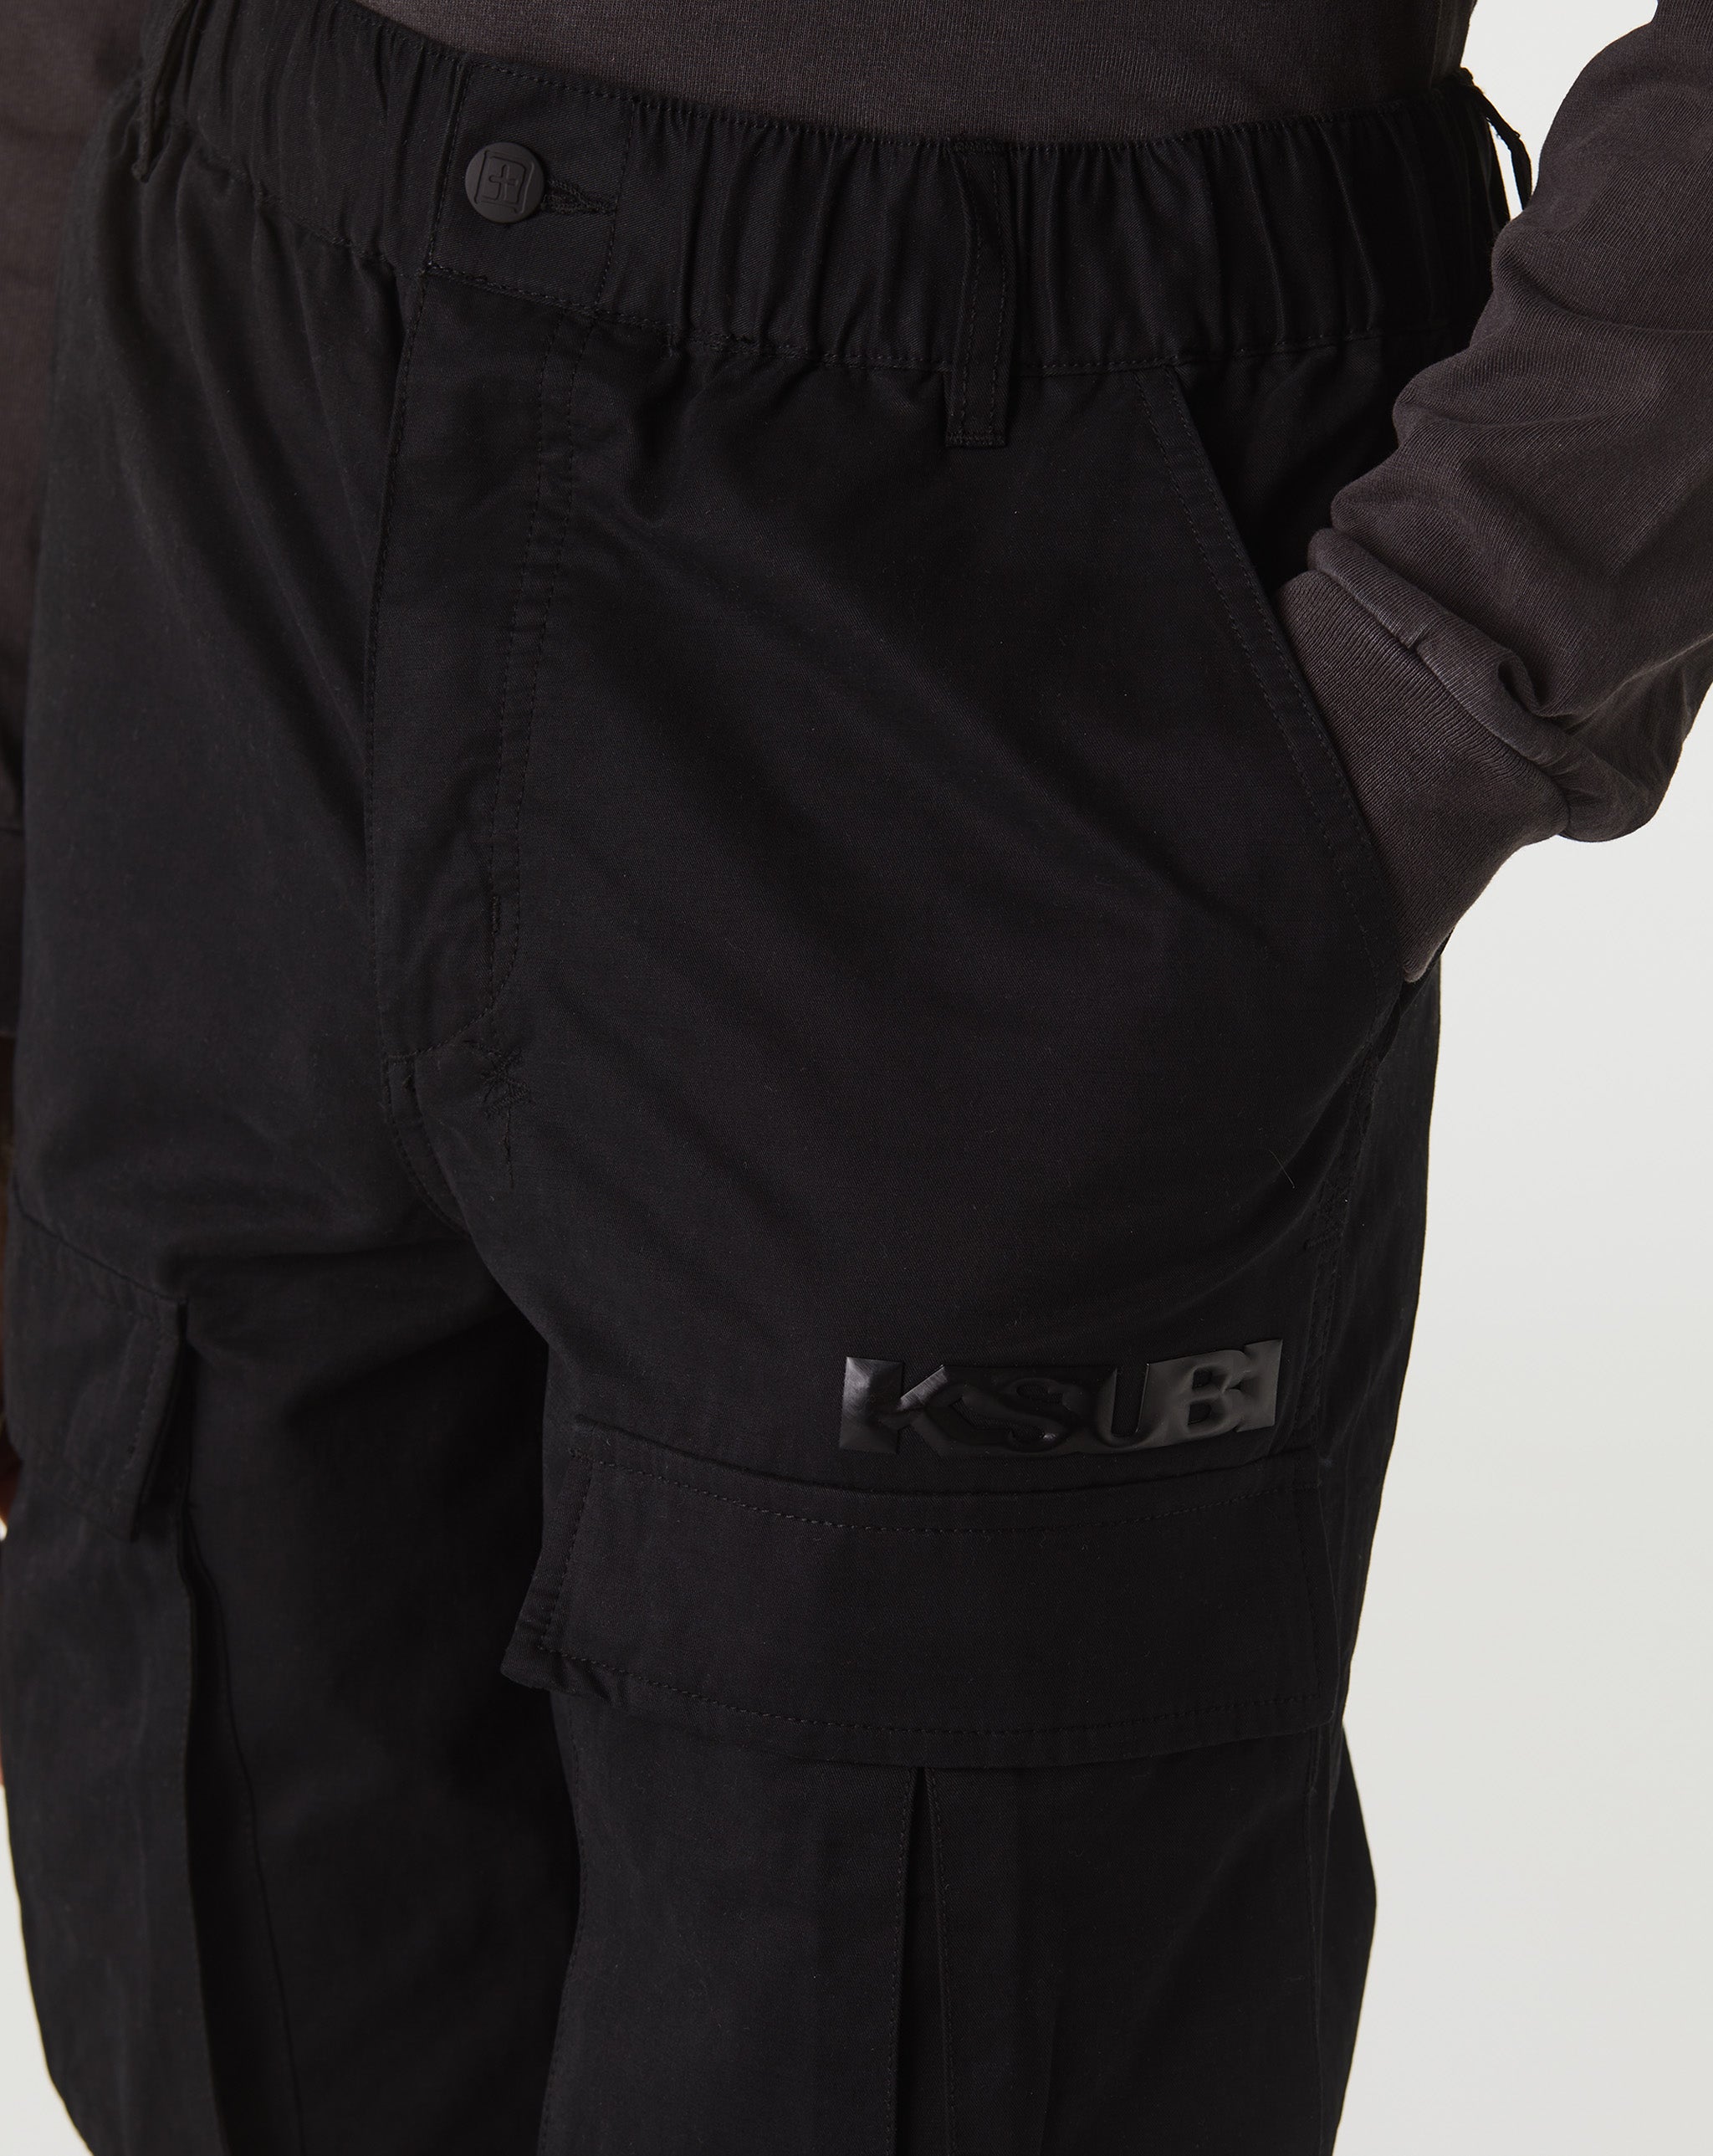 Ksubi Speeder Fugitive Cargo Pants  - XHIBITION